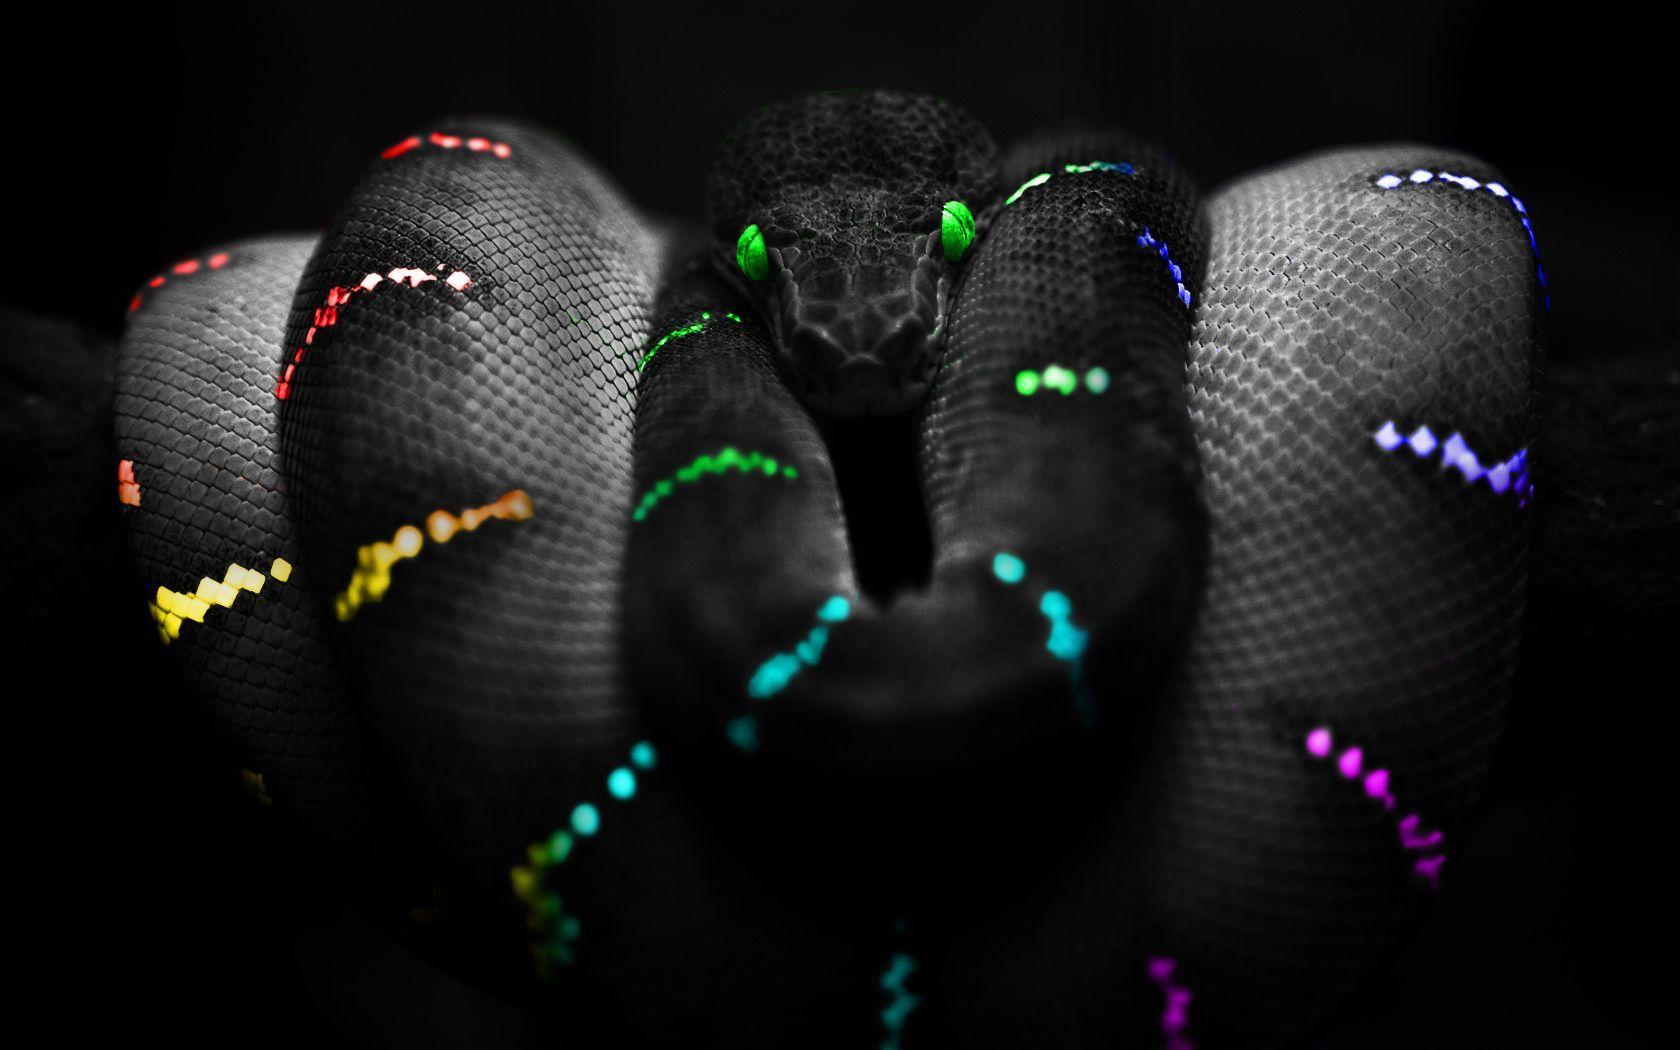 Python Programming Wallpaper. hhh. Snake wallpaper, Snake, Animals